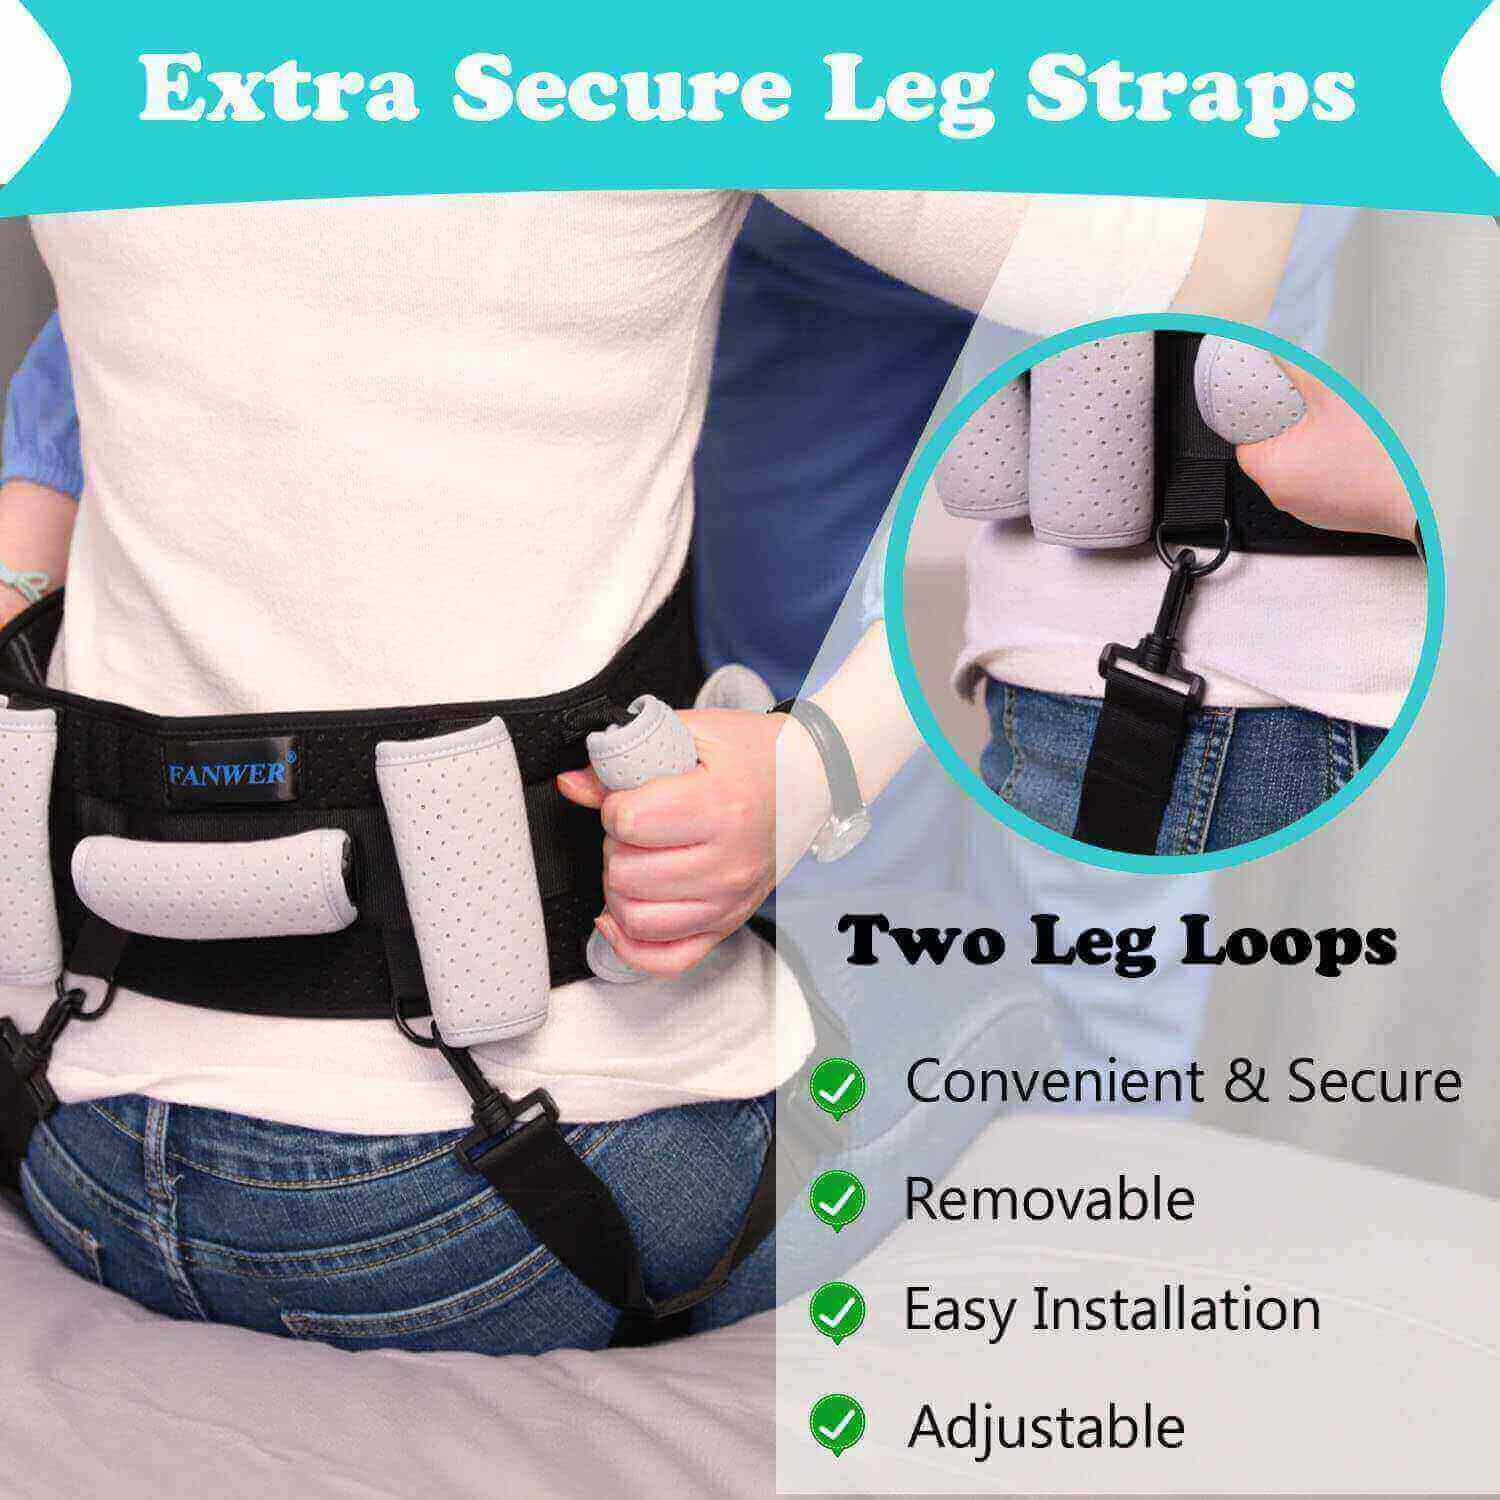 Fanwer transfer gait belt with handles & leg straps for transfer aids, leg straps with buckles